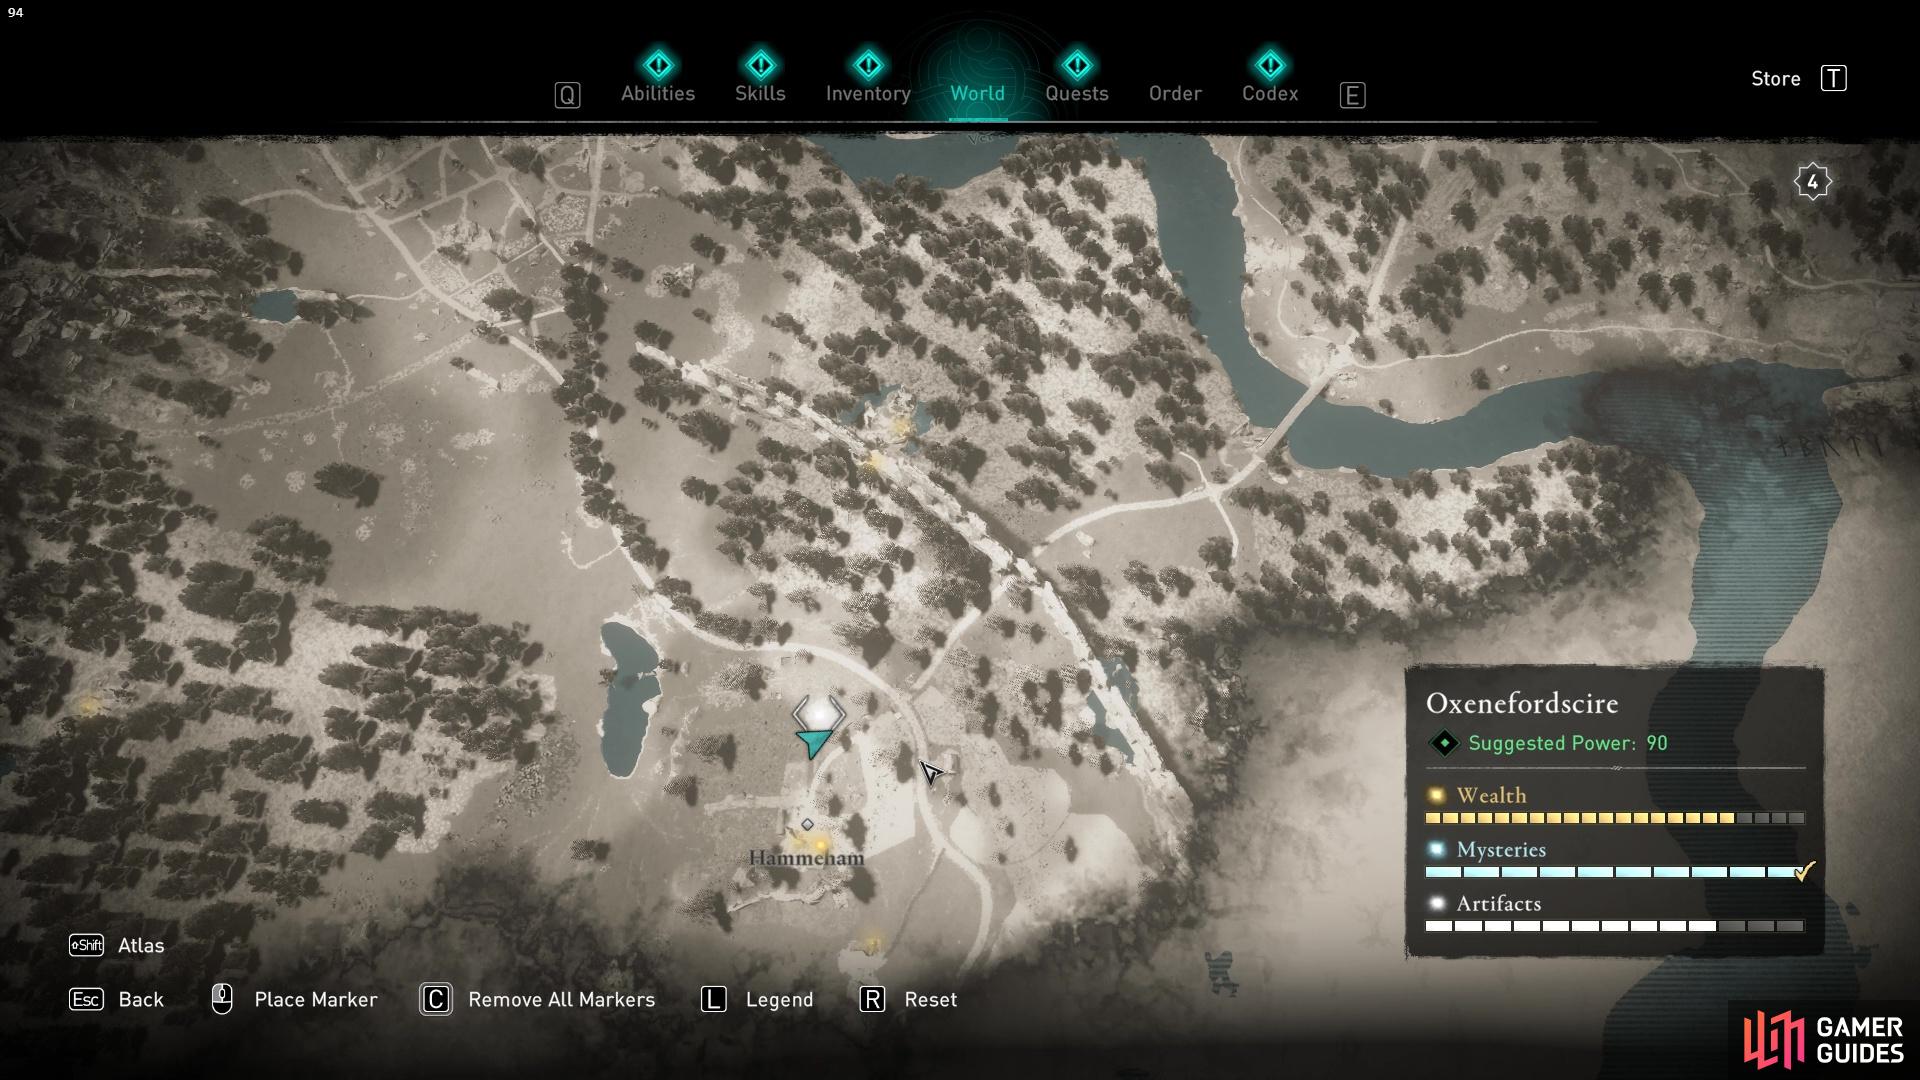 Treasure Hoard Maps - Suthsexe - Artifacts, Assassin's Creed: Valhalla